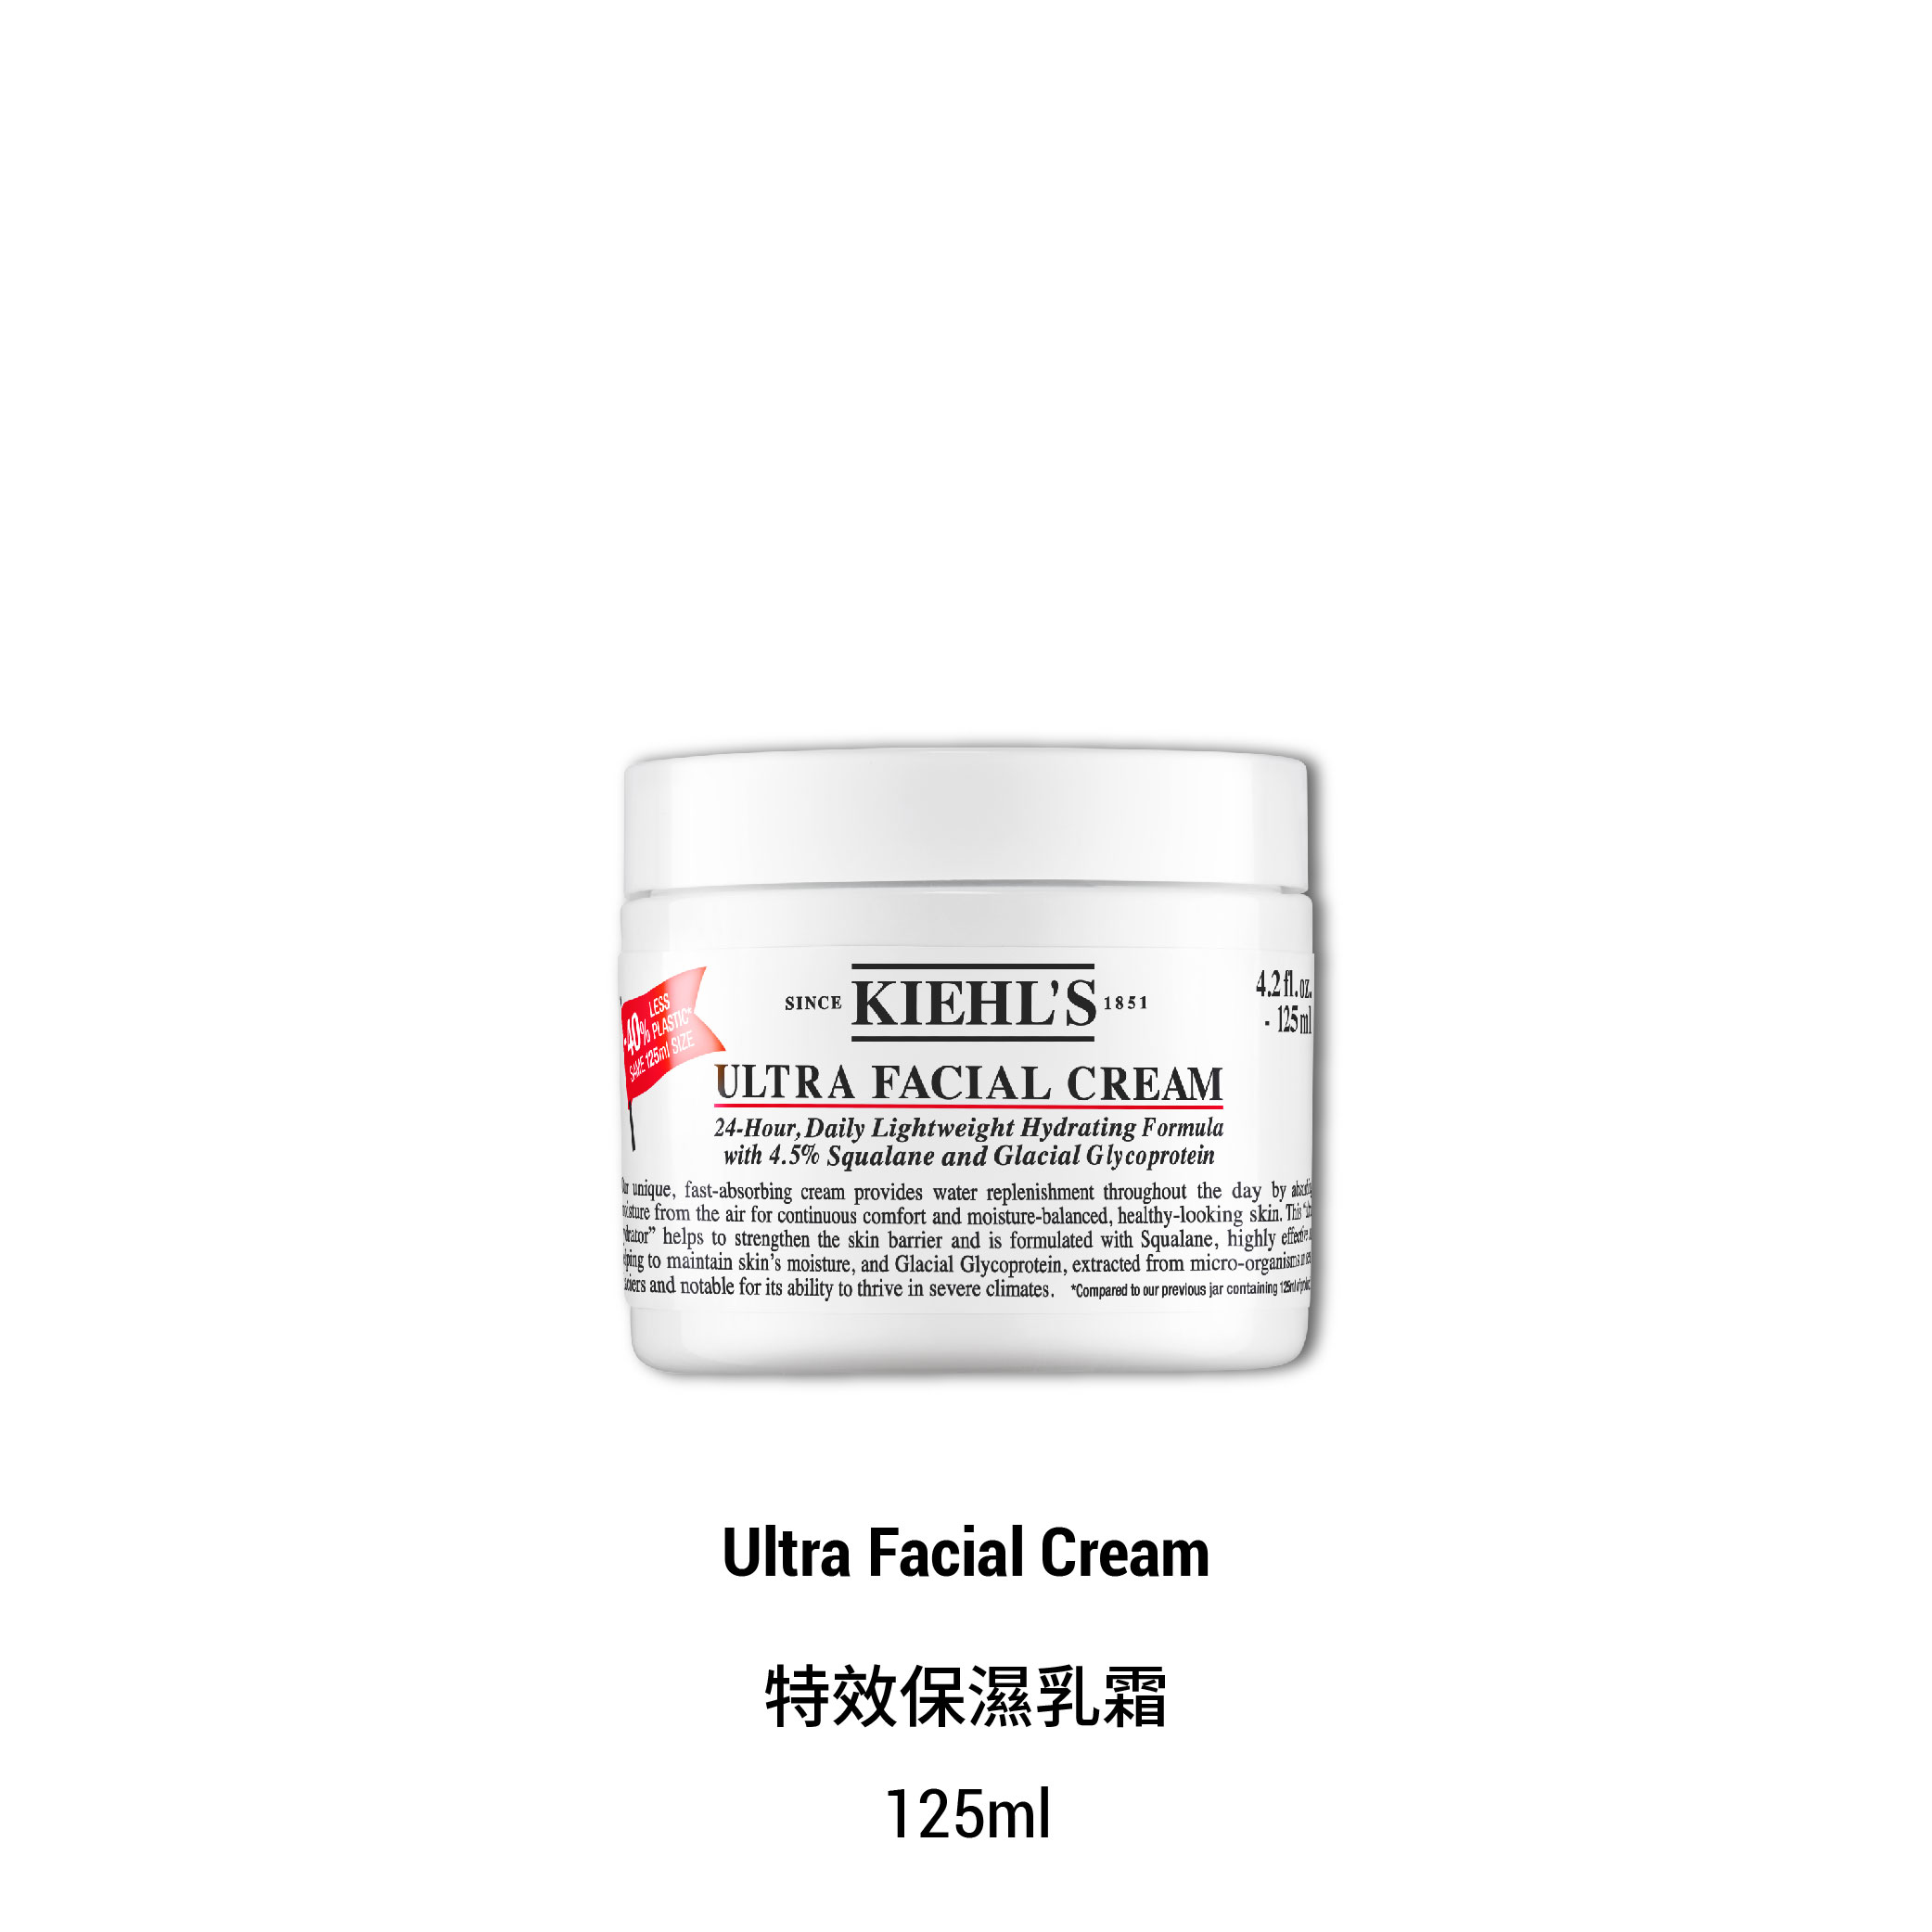 Ultra Facial Cream Jumbo Special